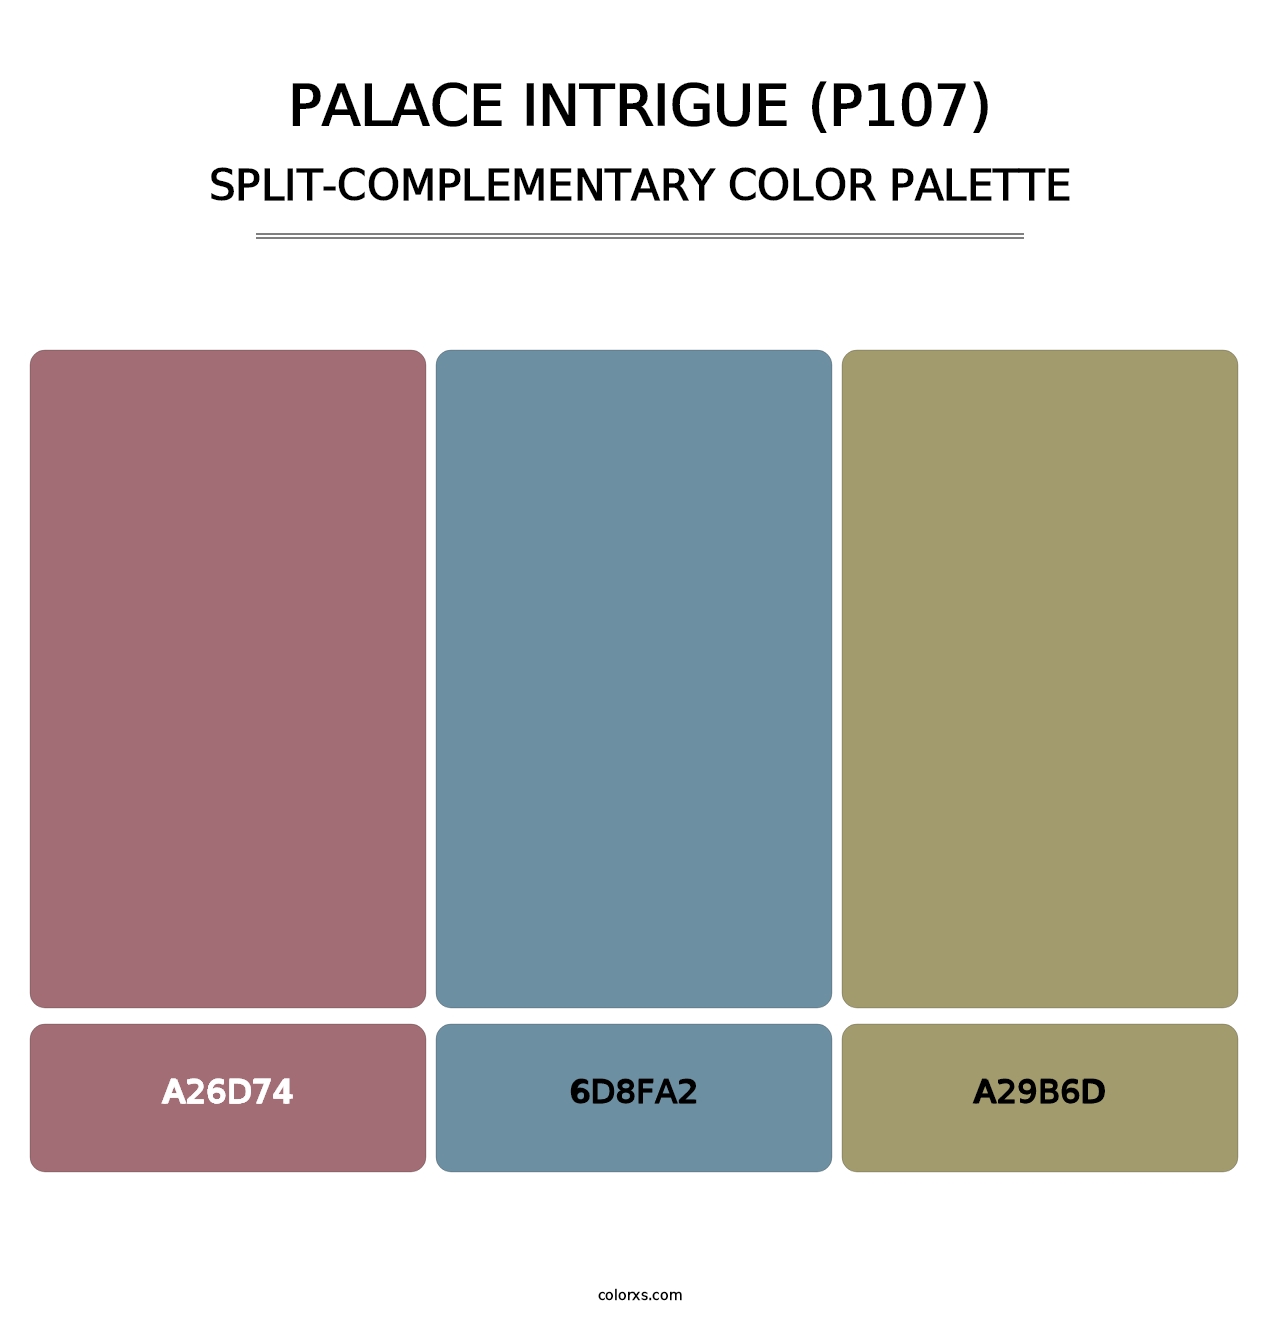 Palace Intrigue (P107) - Split-Complementary Color Palette